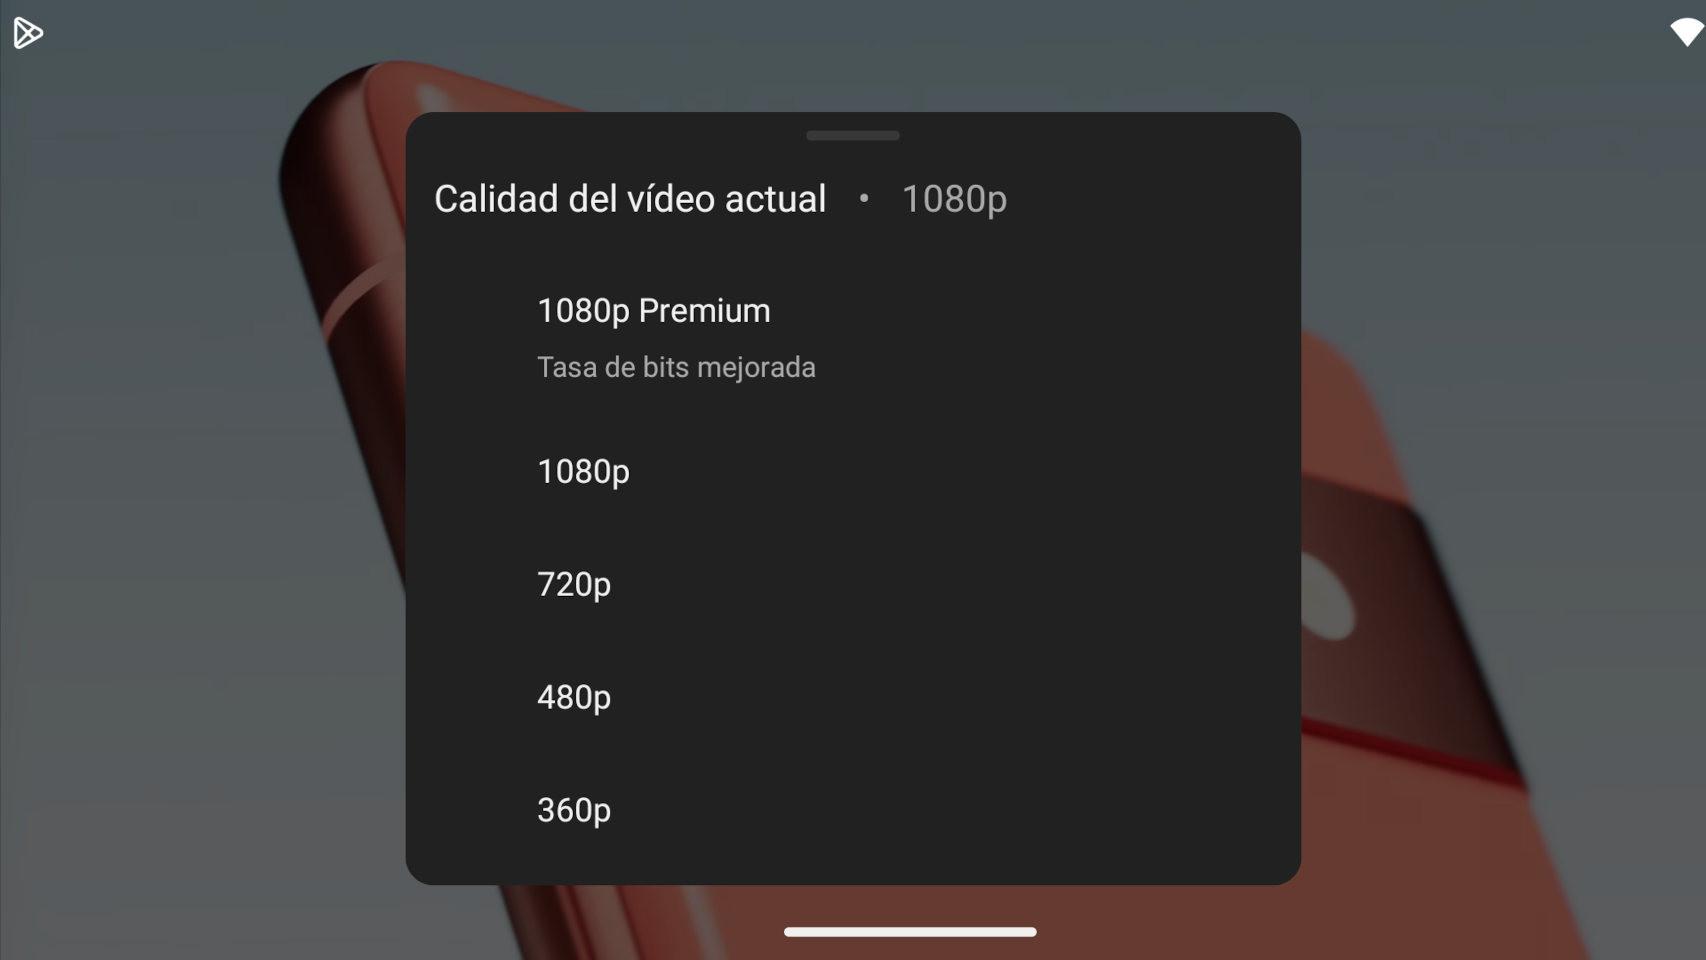 Calidad 1080p Premium en YouTube